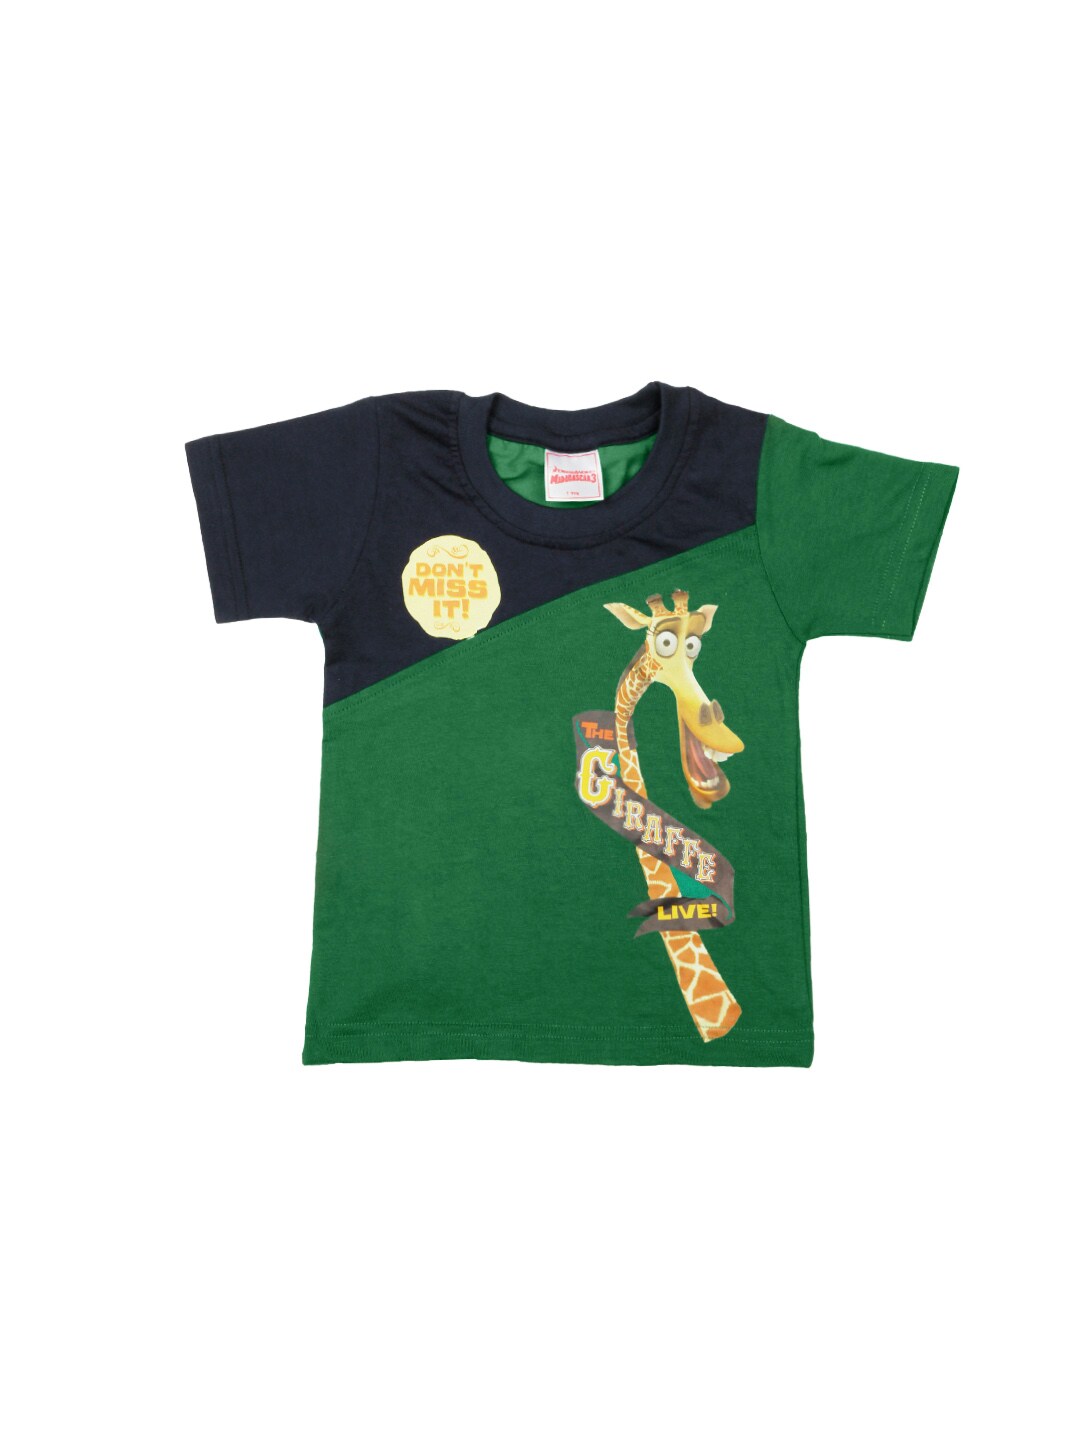 Madagascar3 Boys Green Printed T-Shirt